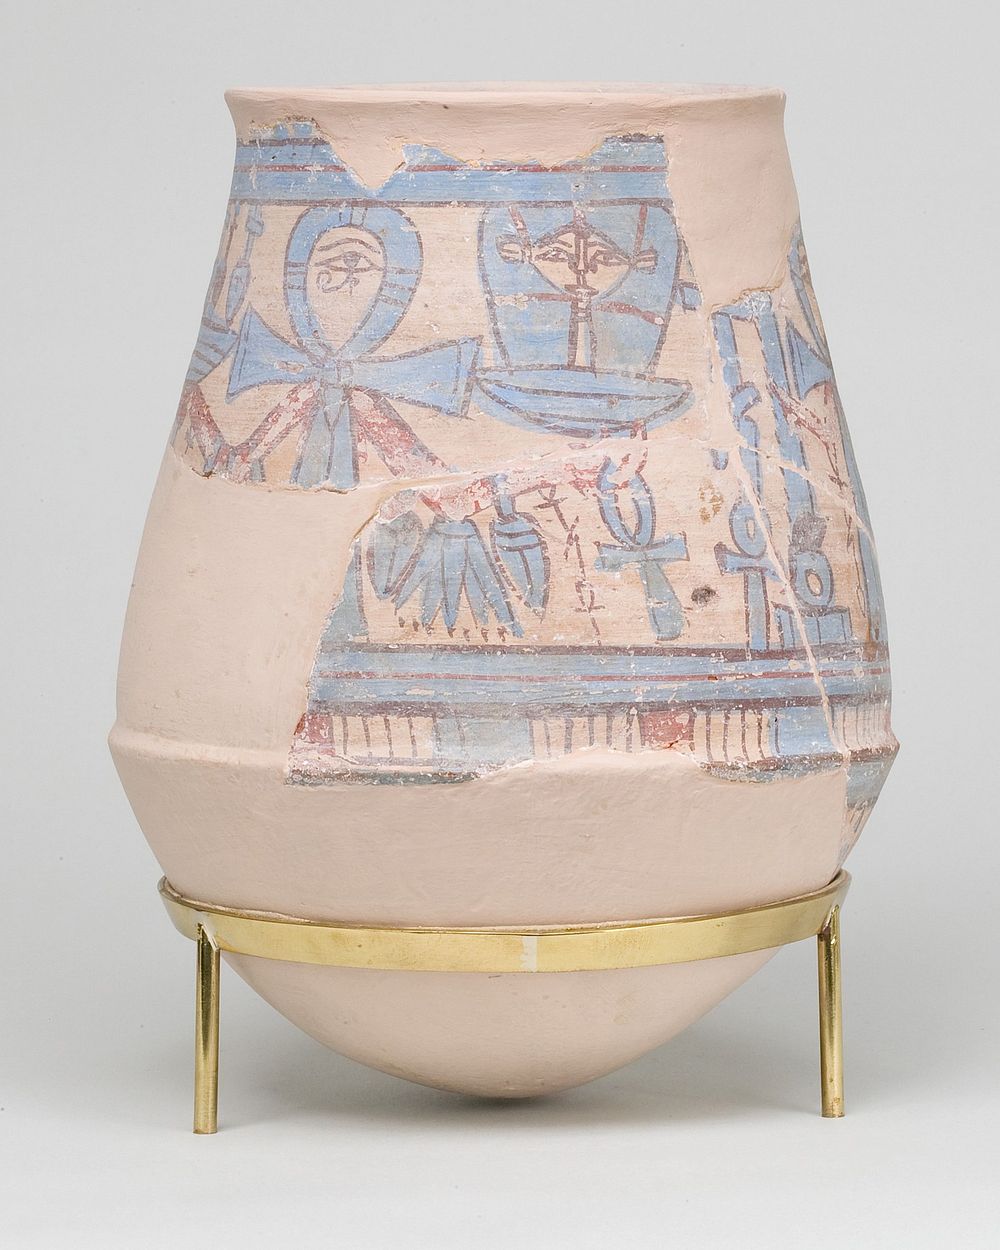 Blue-painted Jar from Malqata with Hathor Emblem